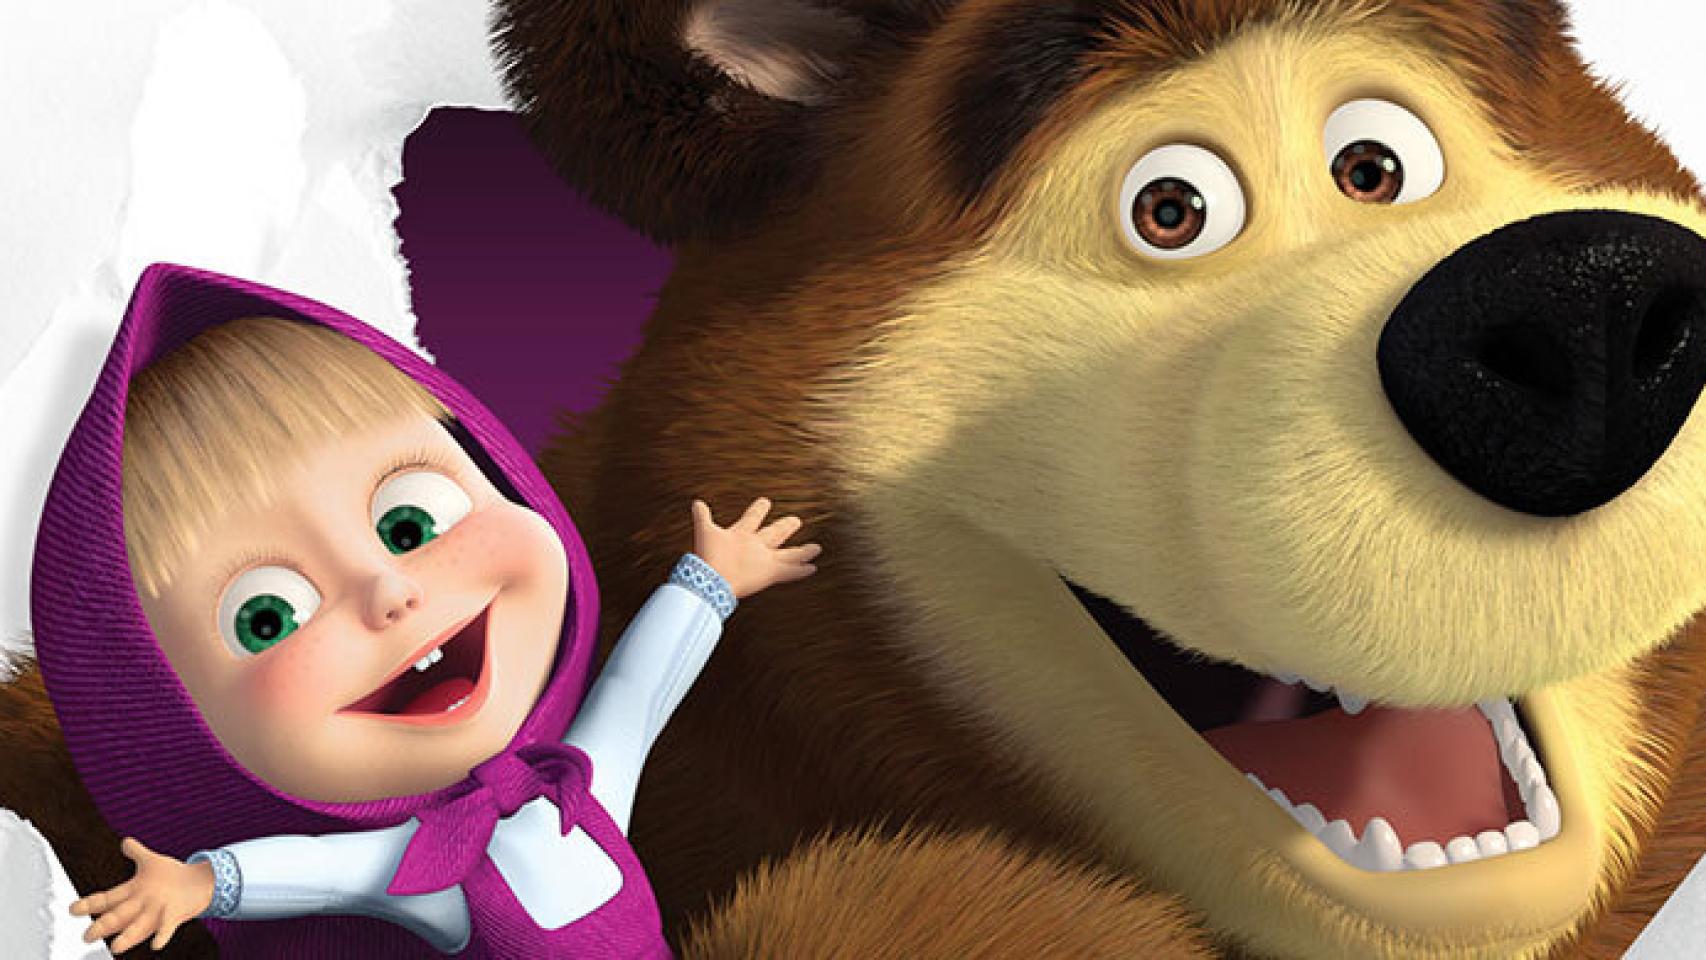 Canal Panda estrena la premiada serie infantil 'Masha y el oso'